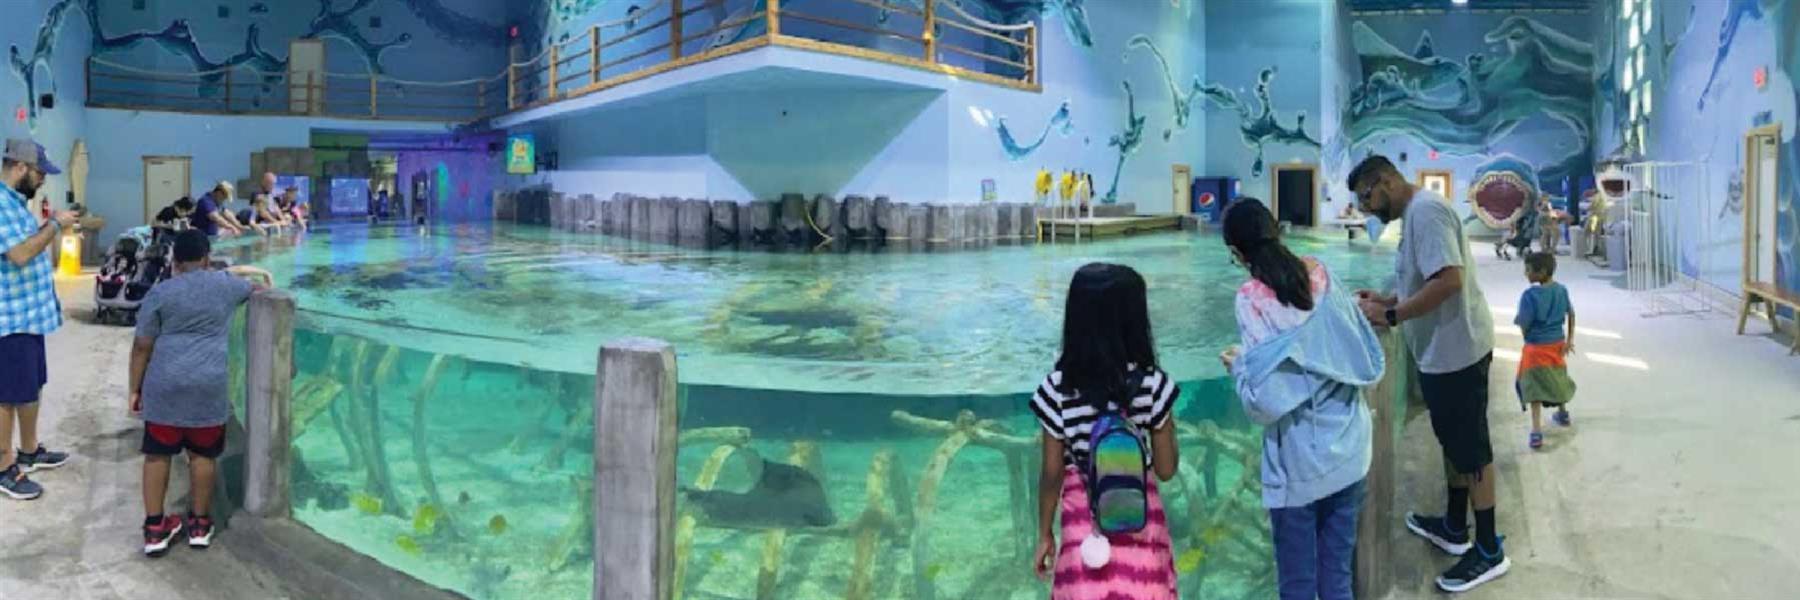 Houston Interactive Aquarium & Animal Preserve in Humble, Texas